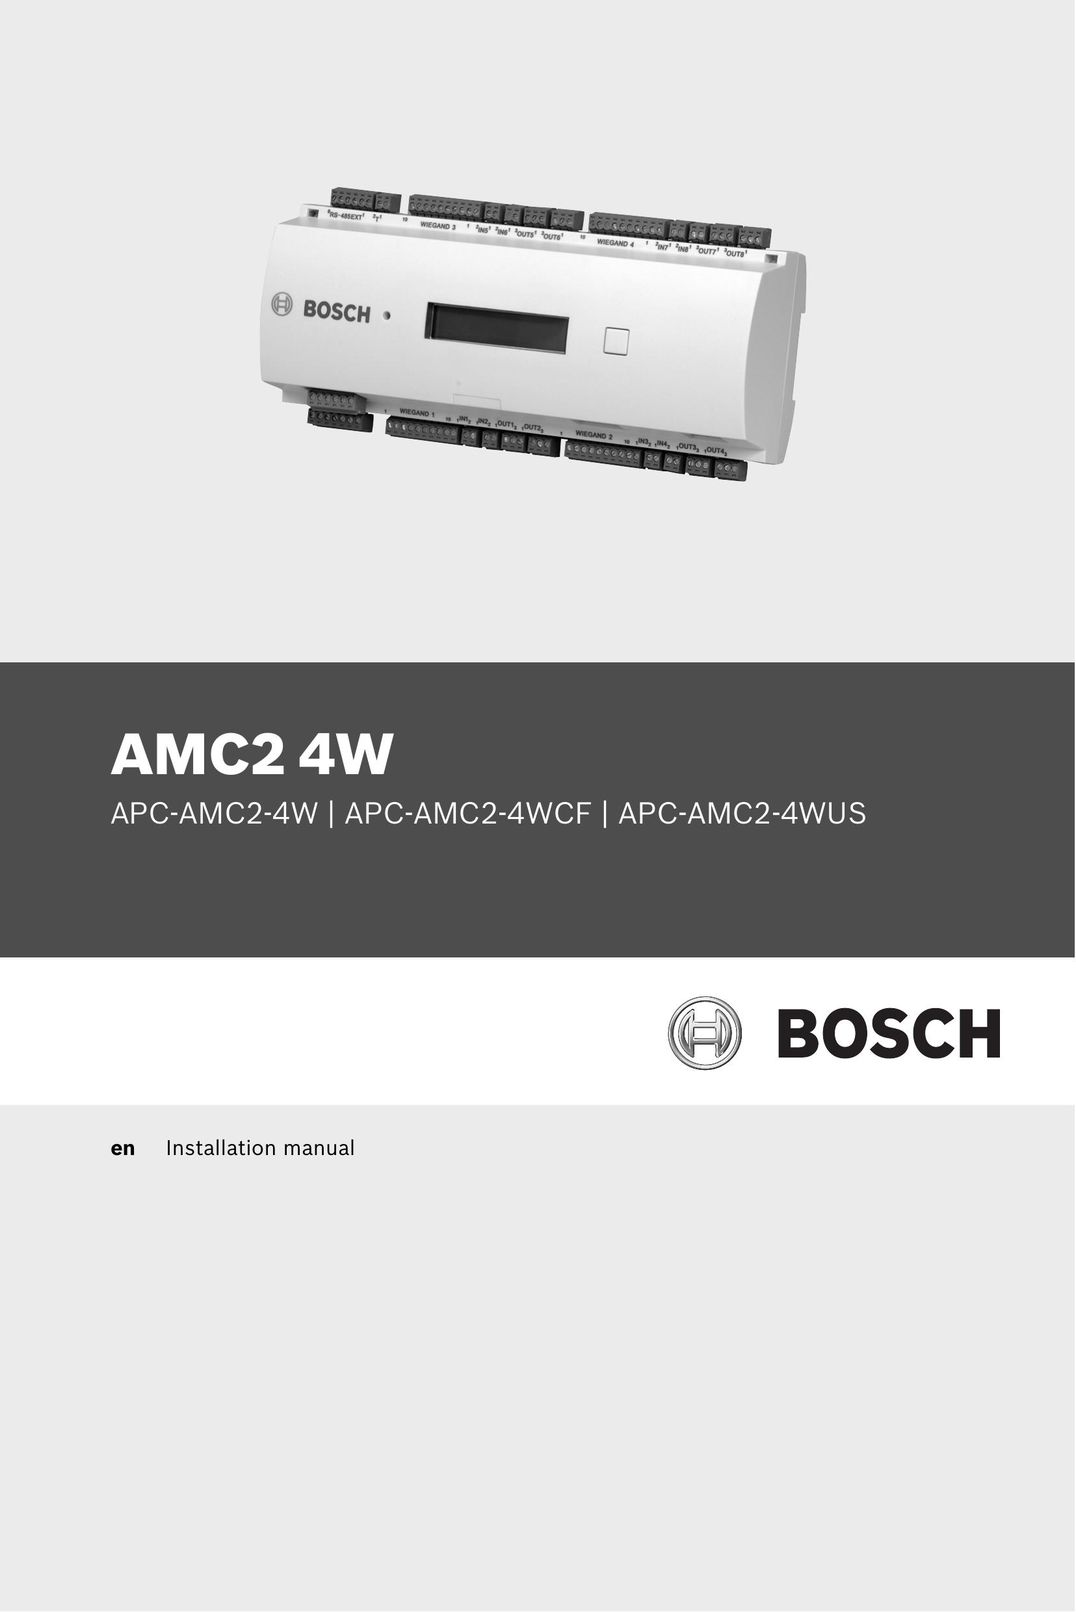 Bosch Appliances APC-AMC2-4W Home Security System User Manual